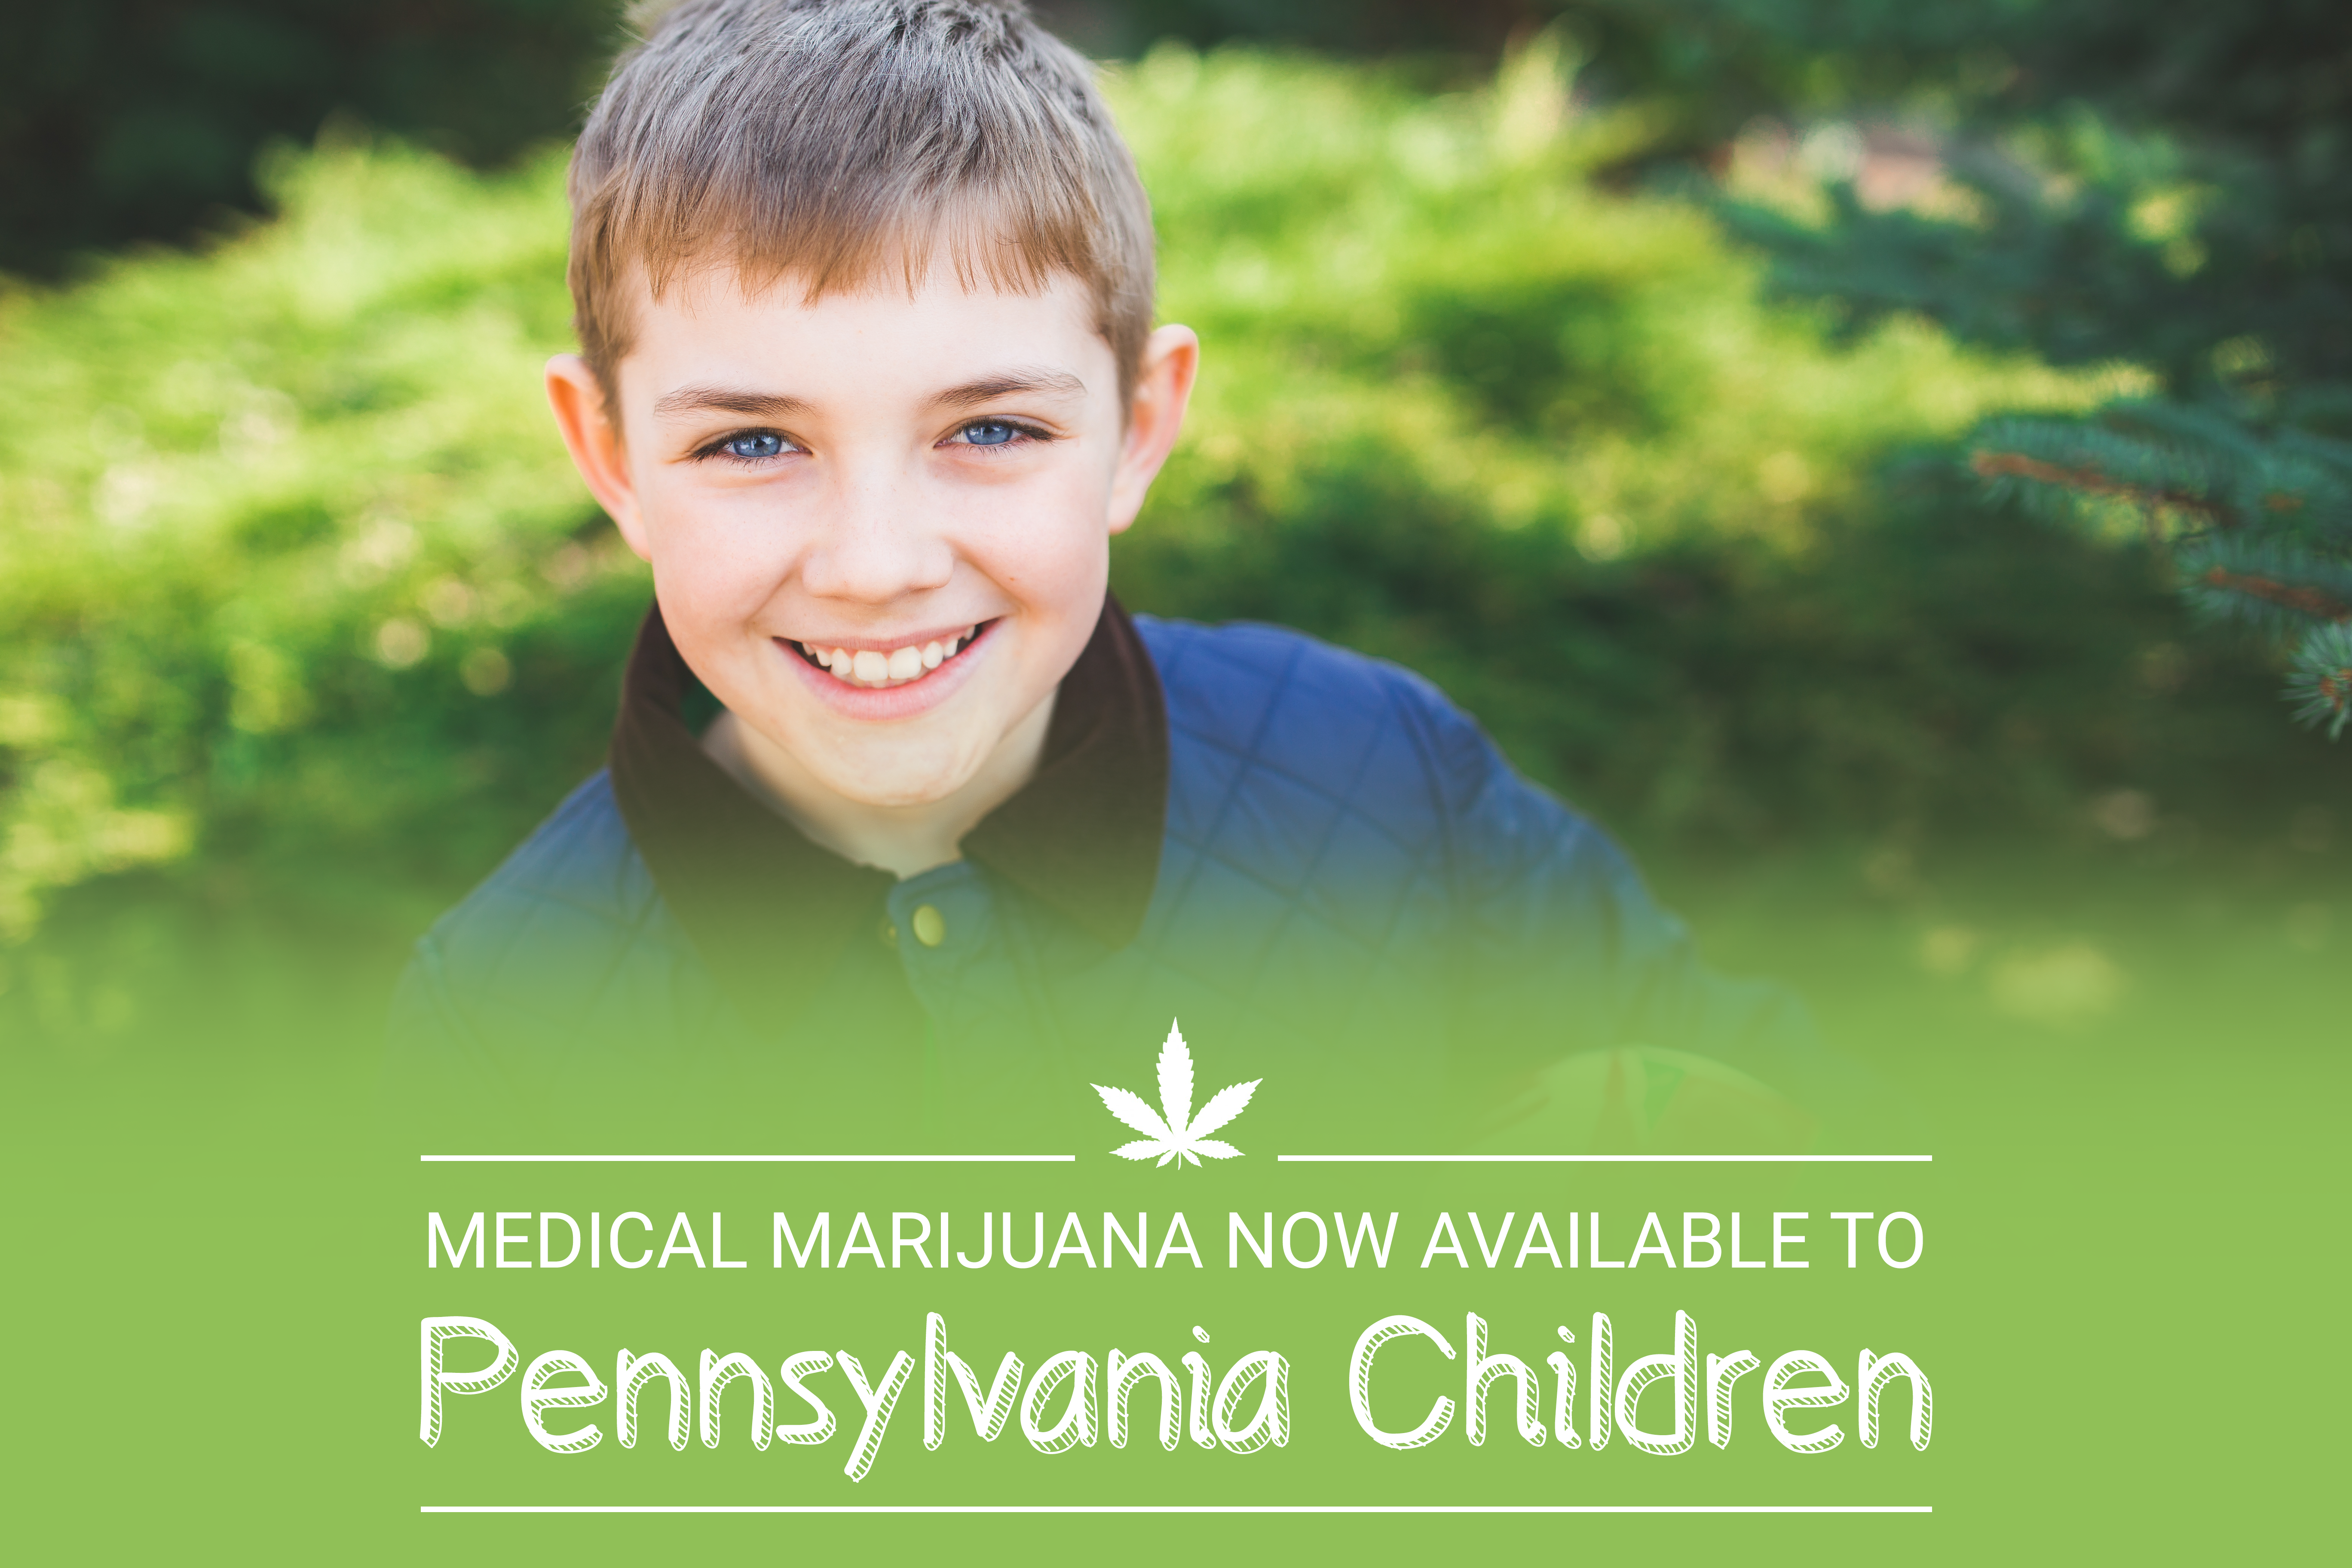 Medical marijuana now available to Pennsylvania children